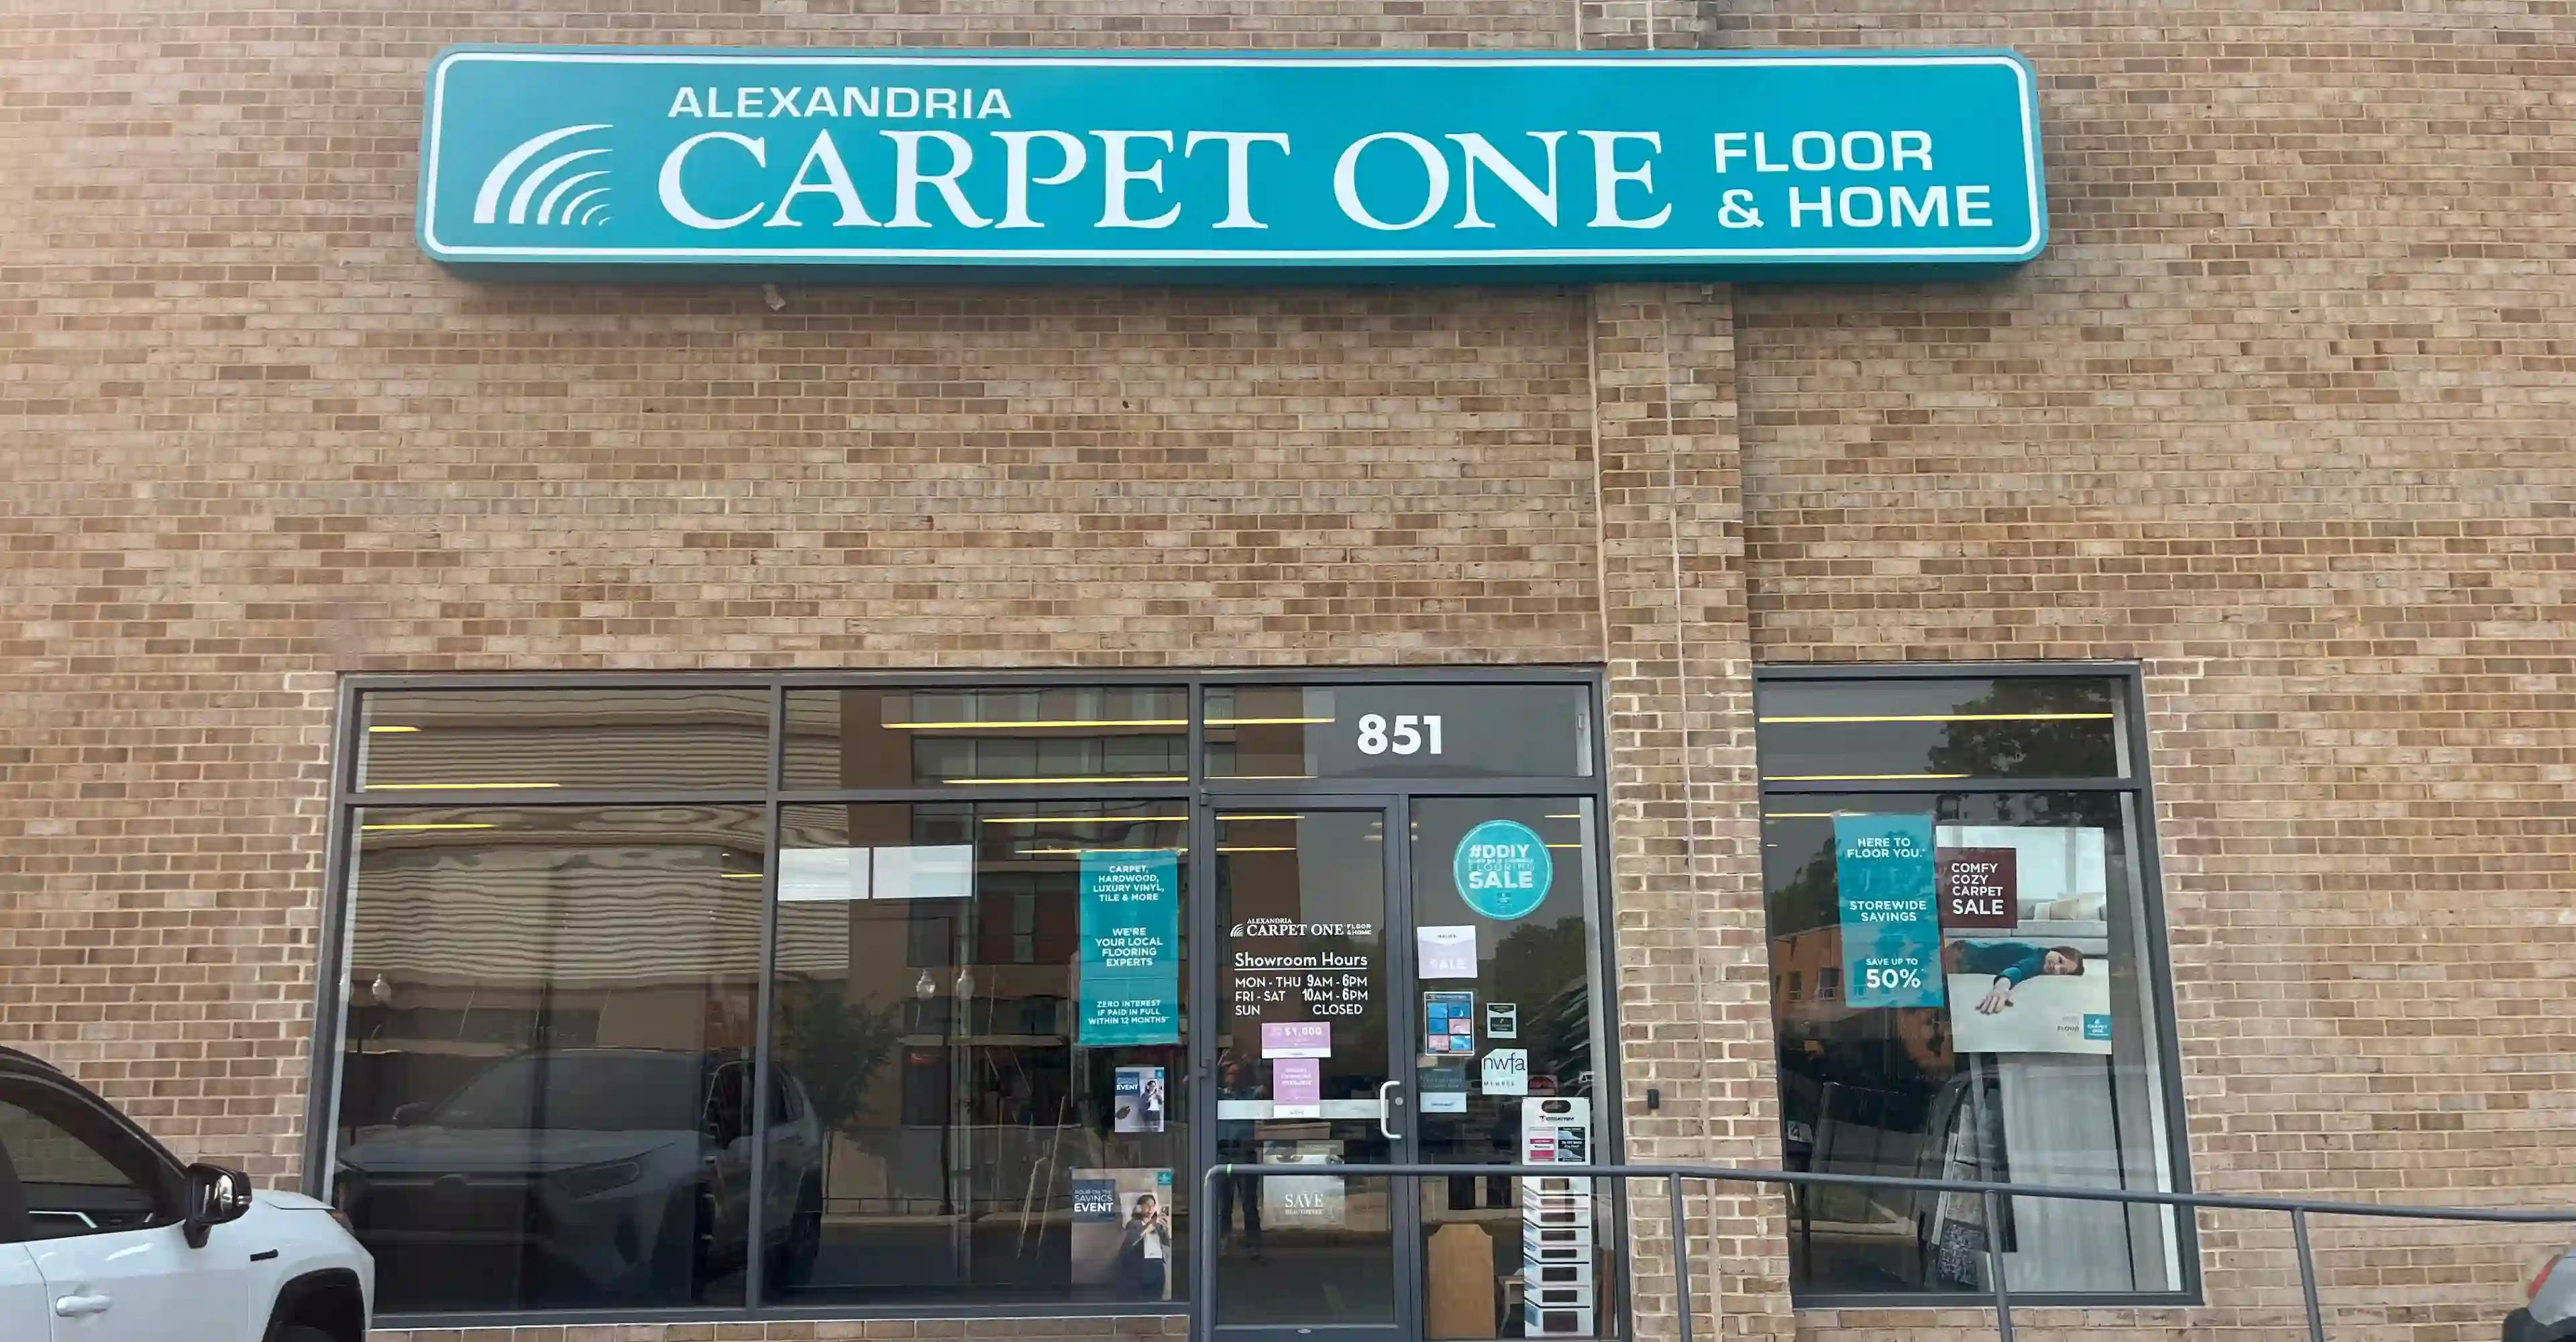 Alexandria carpet one storefront